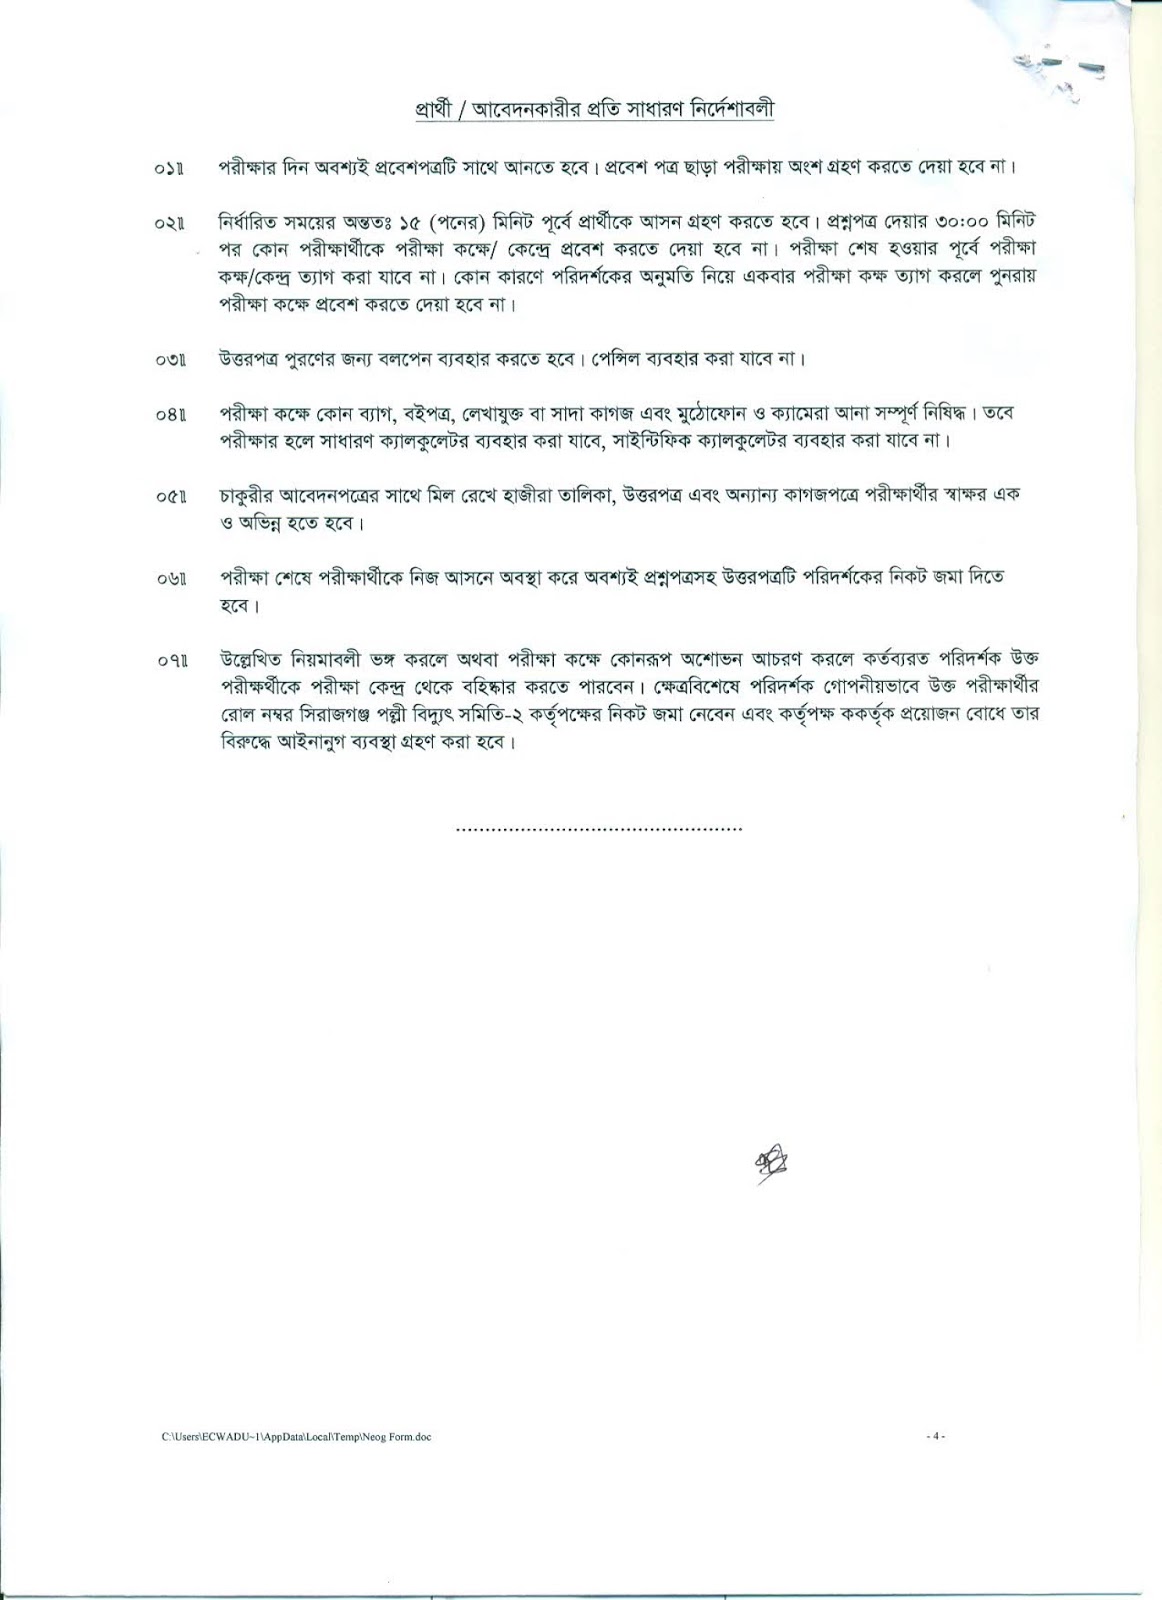 Sirajganj Palli Bidyut Samity-2 Job Application Form